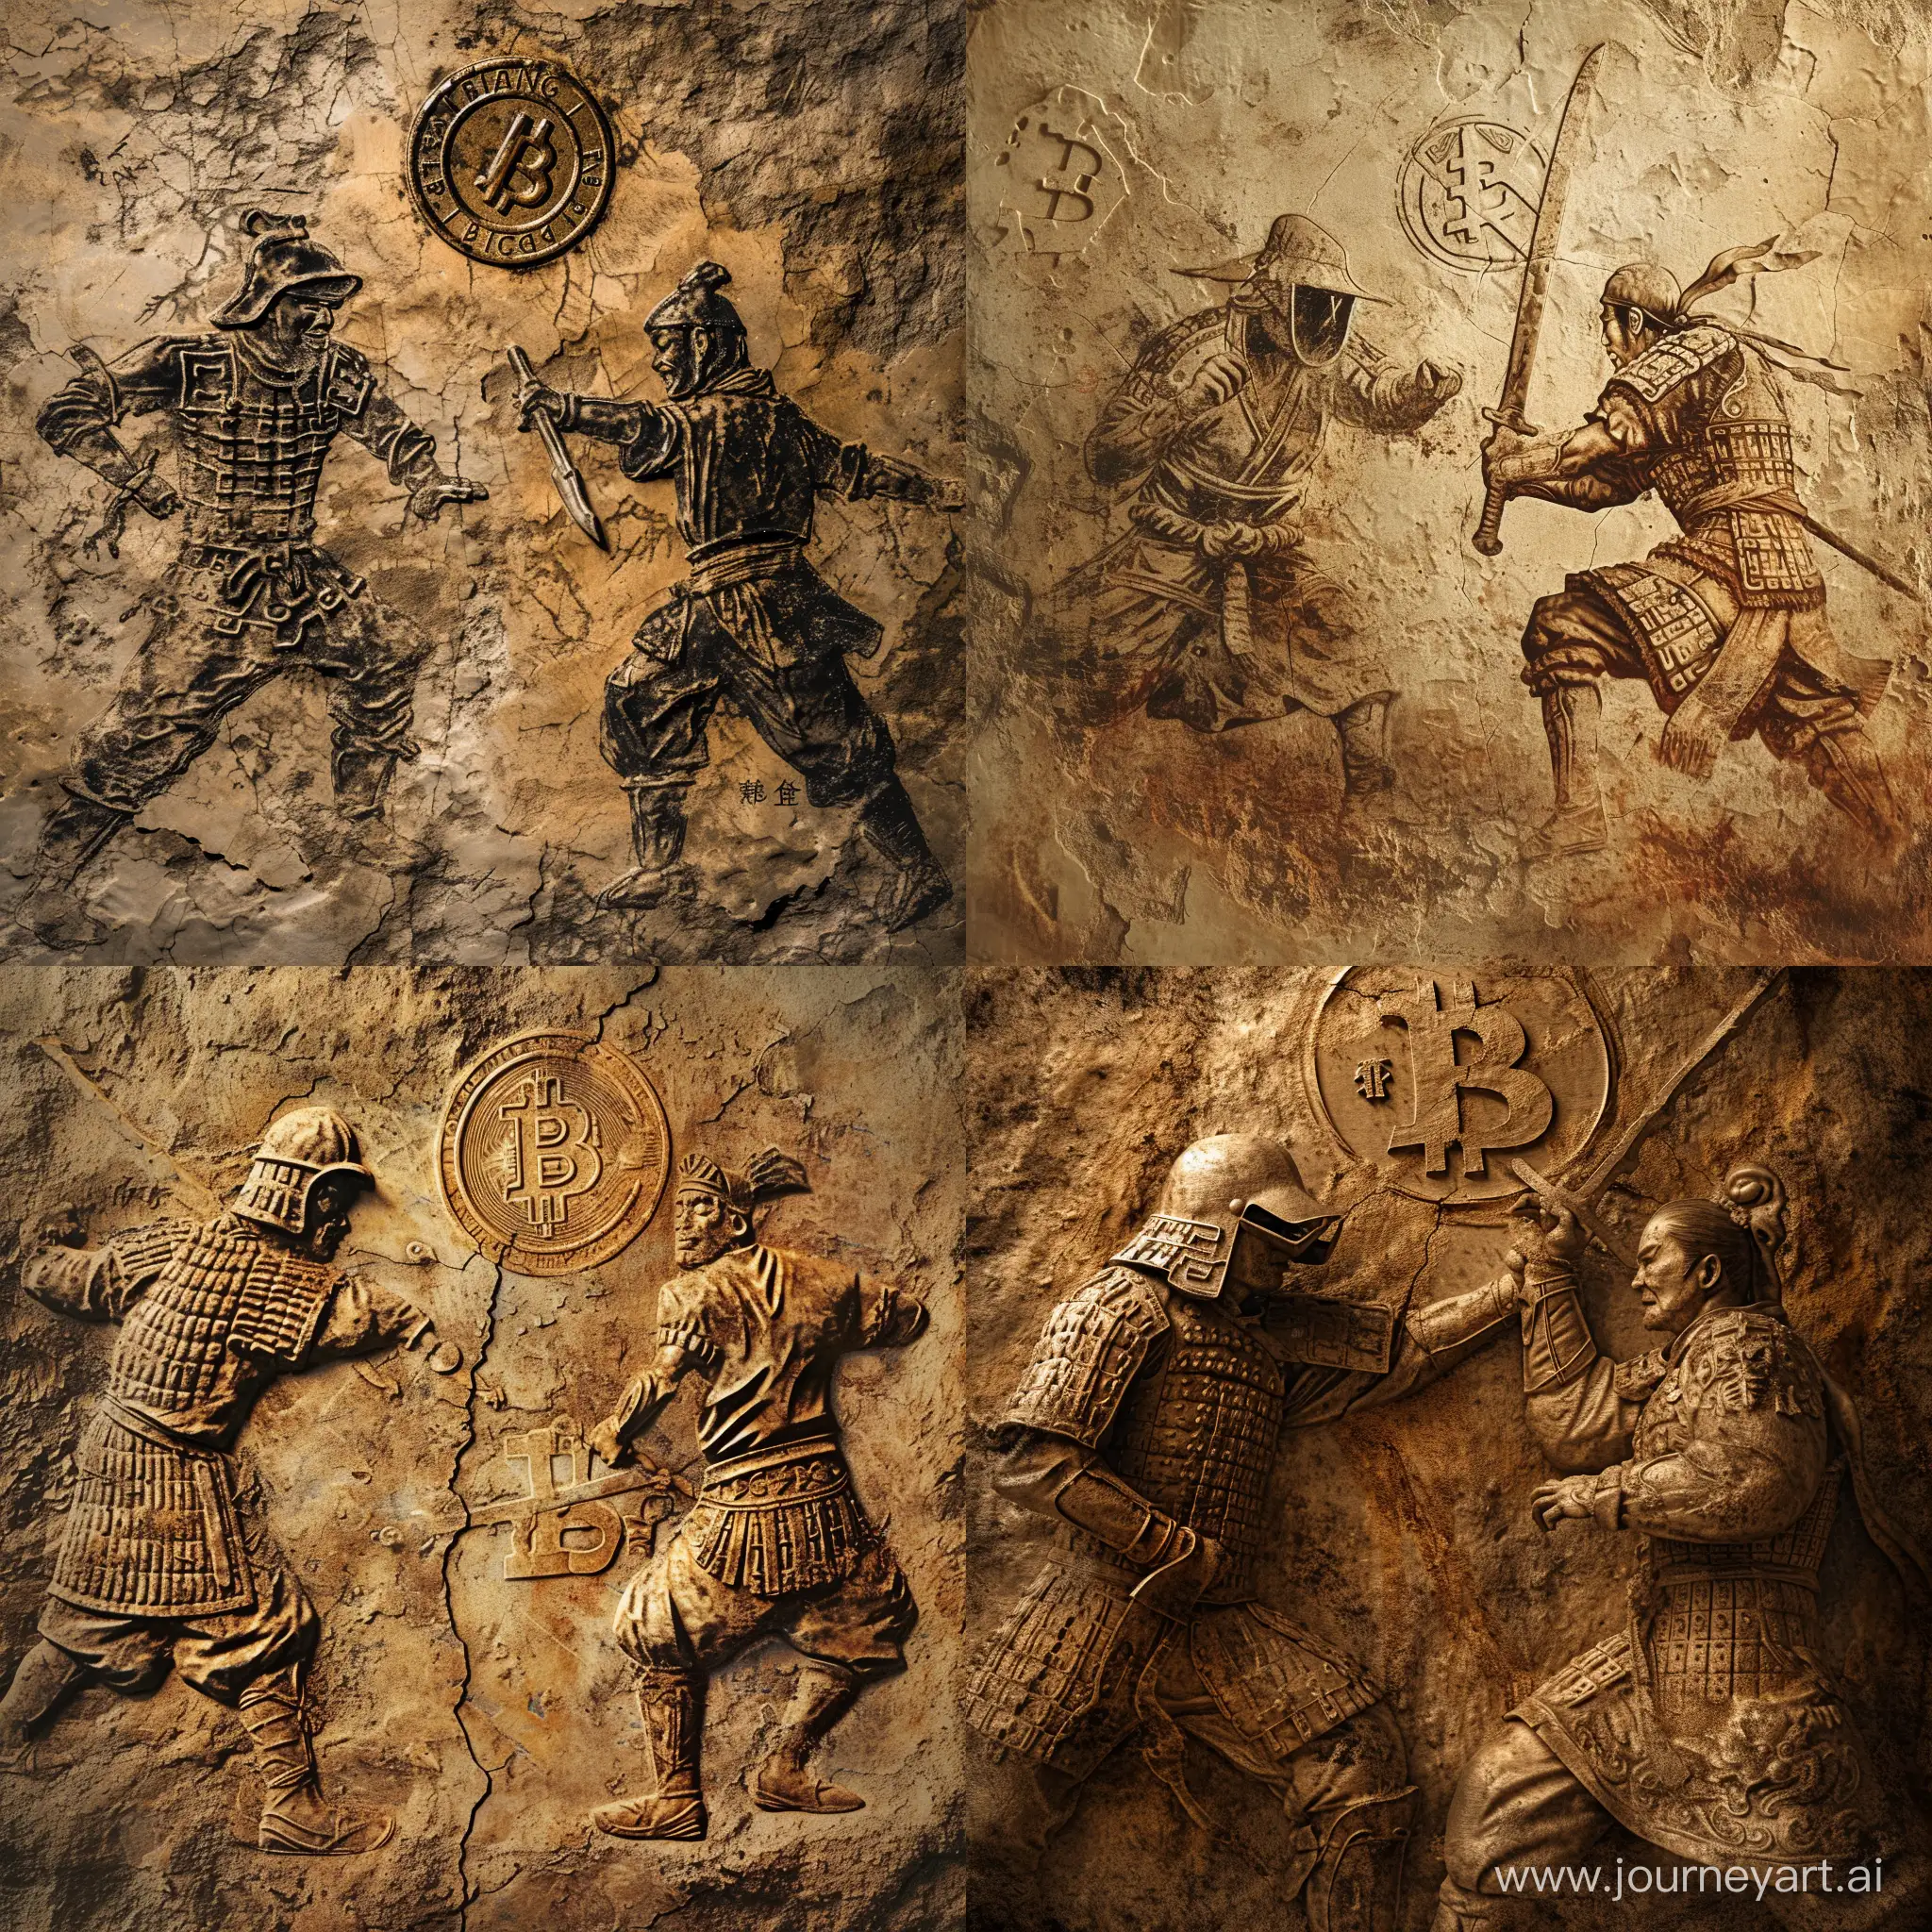 Prehistoric-Battle-of-Symbols-Chinese-Soldier-vs-Japanese-Warrior